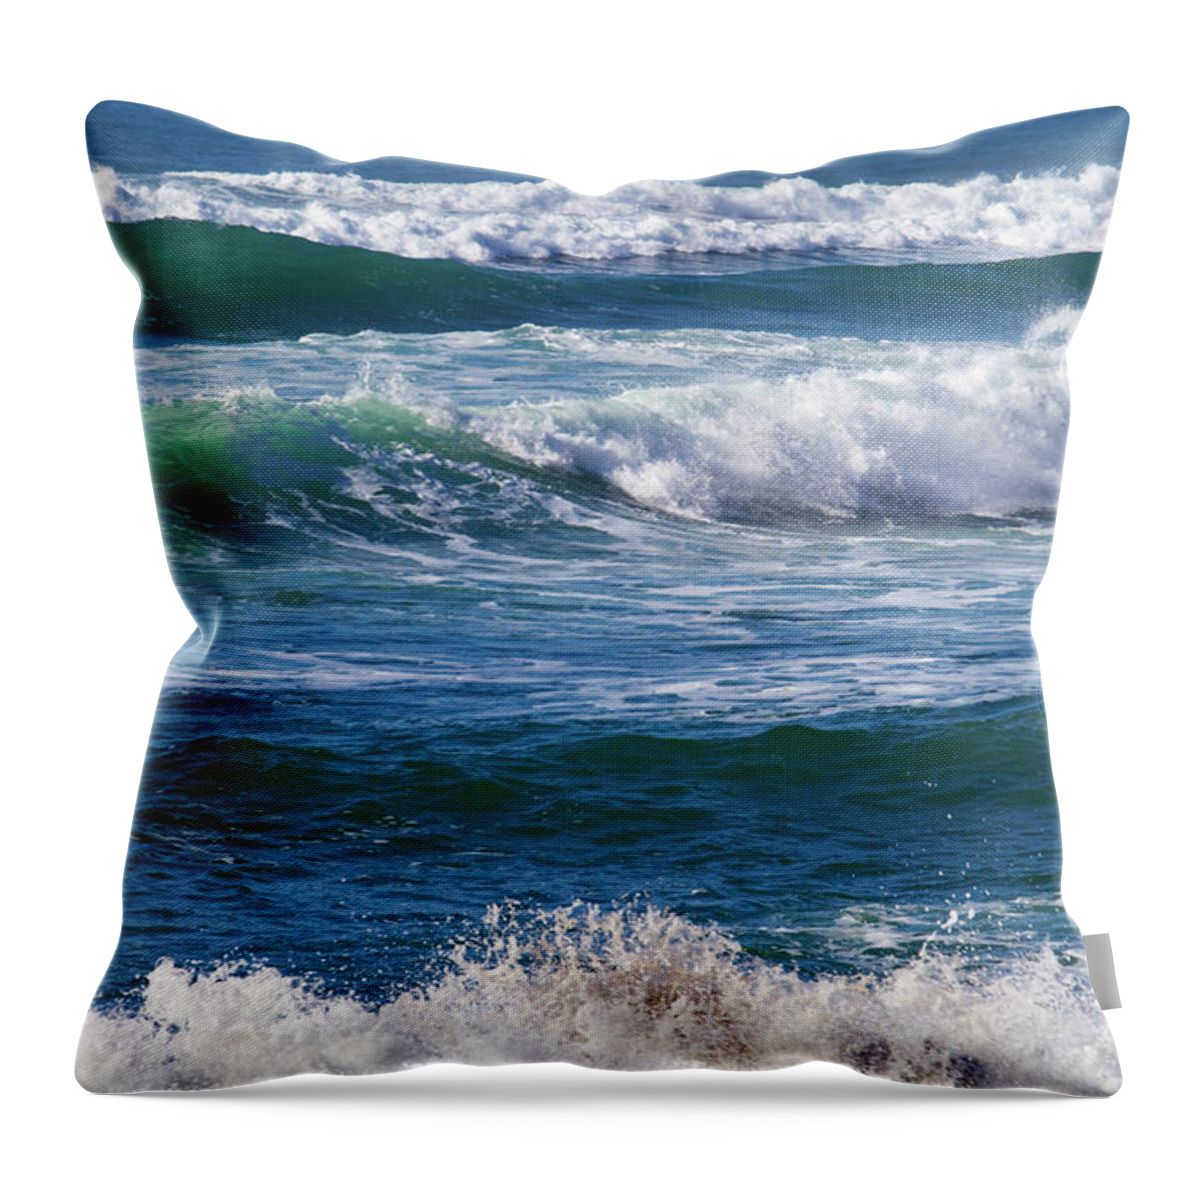 Seascape Throw Pillow featuring the photograph Pacific Ocean Waves California Usa by Mark Miller Photos